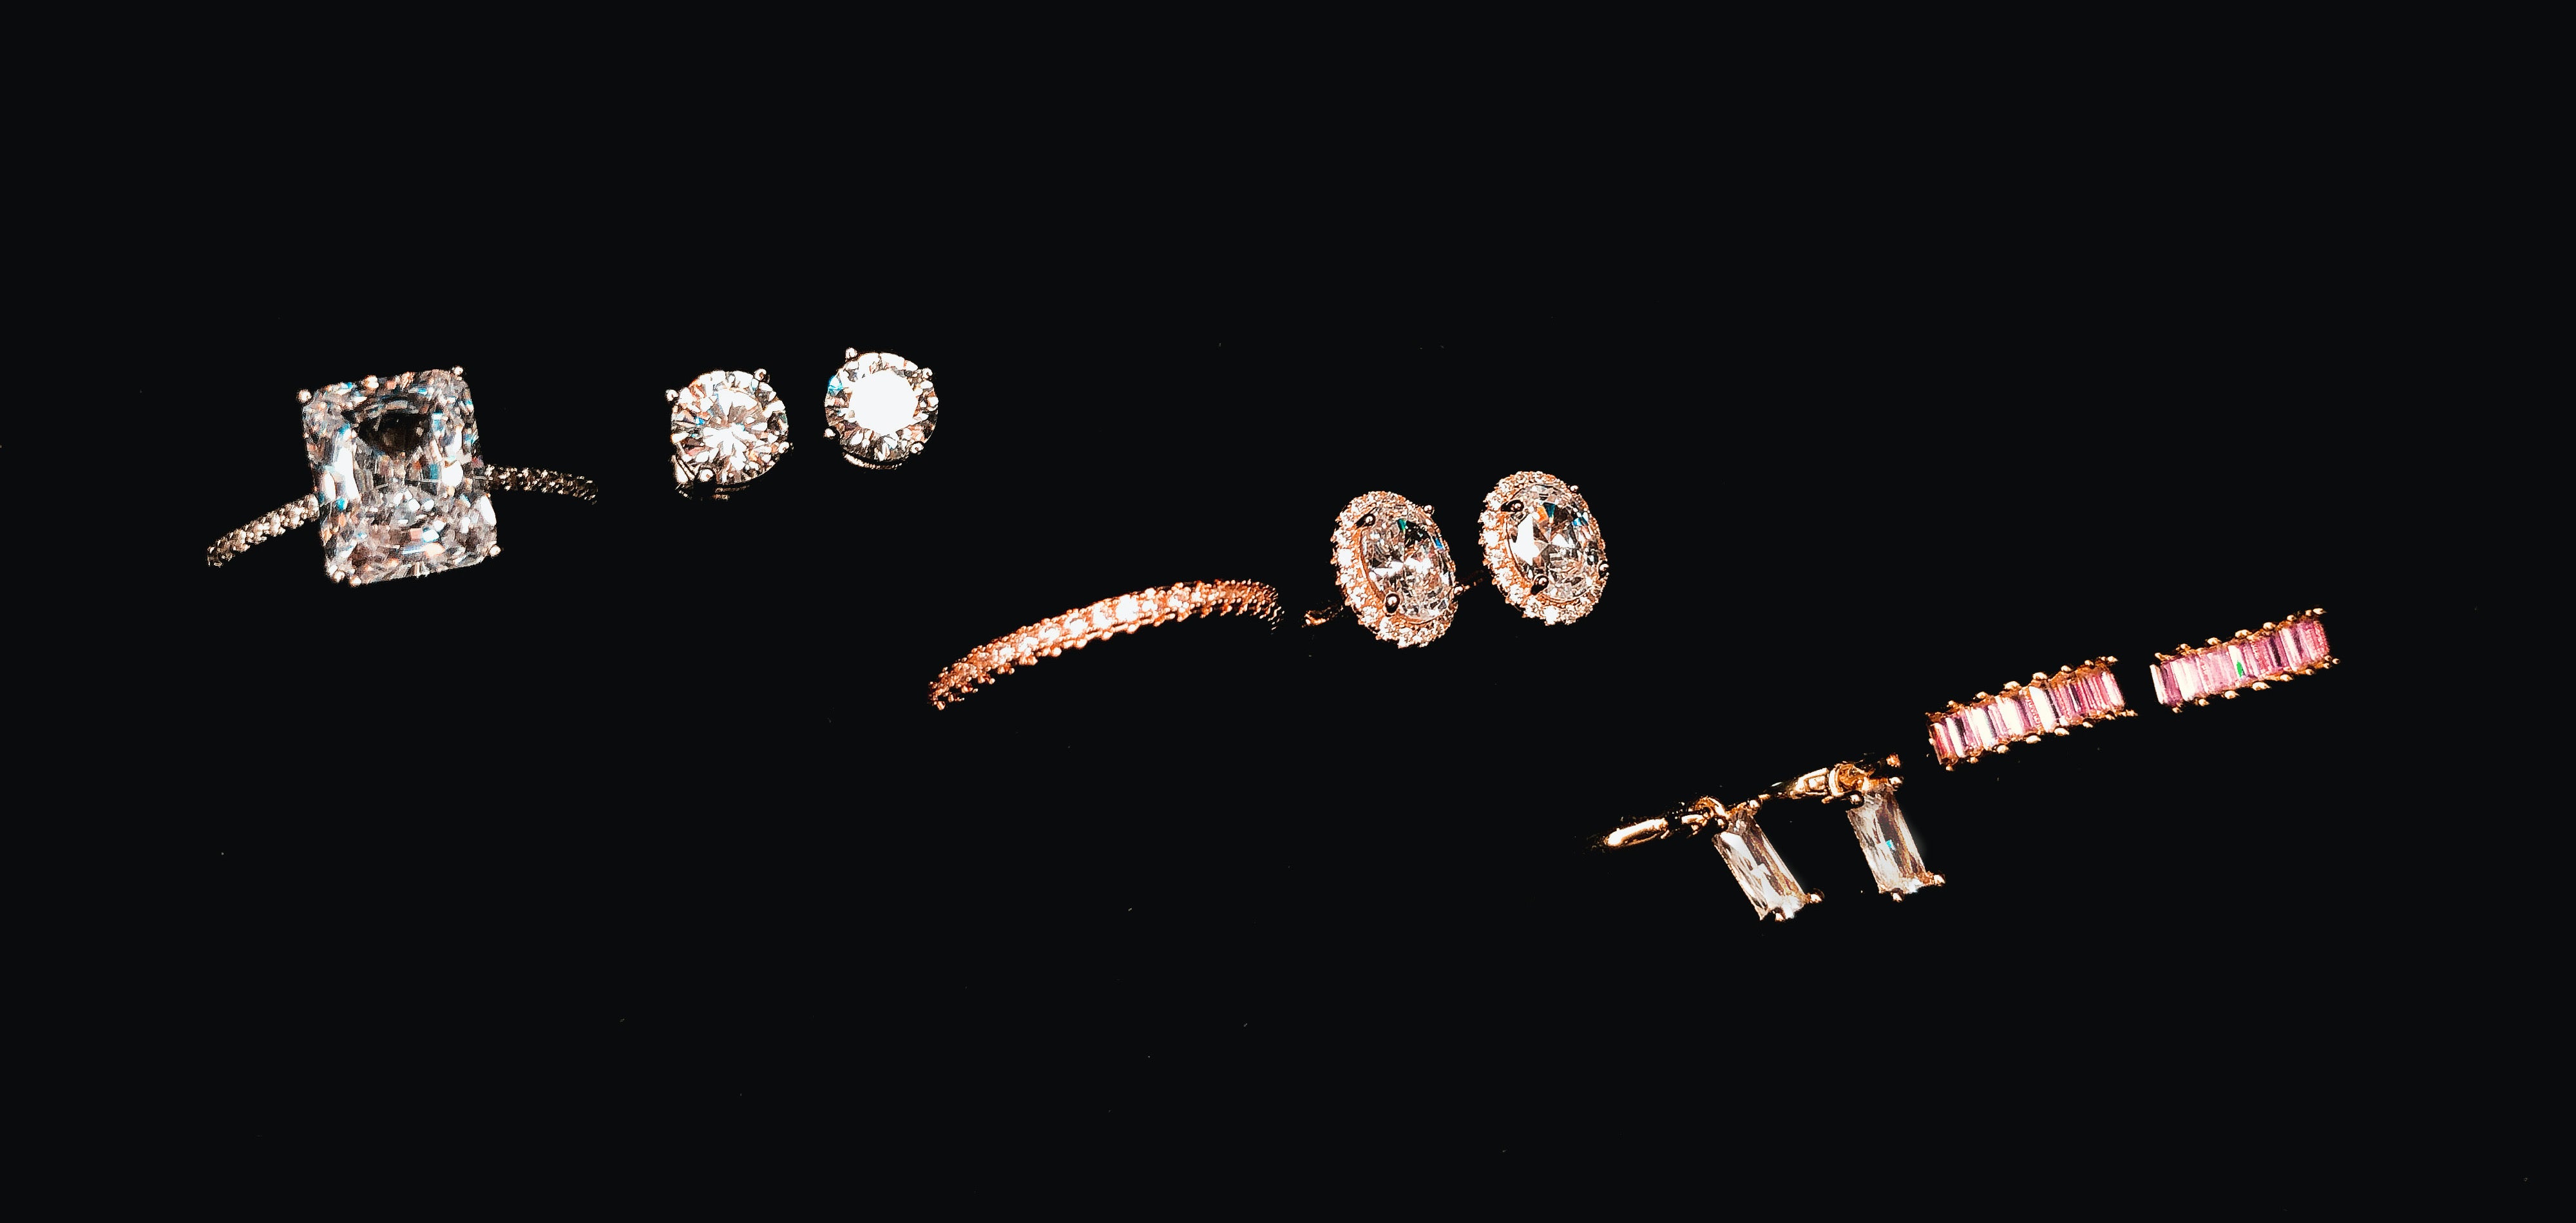 Jewelries on a jewelry organiser